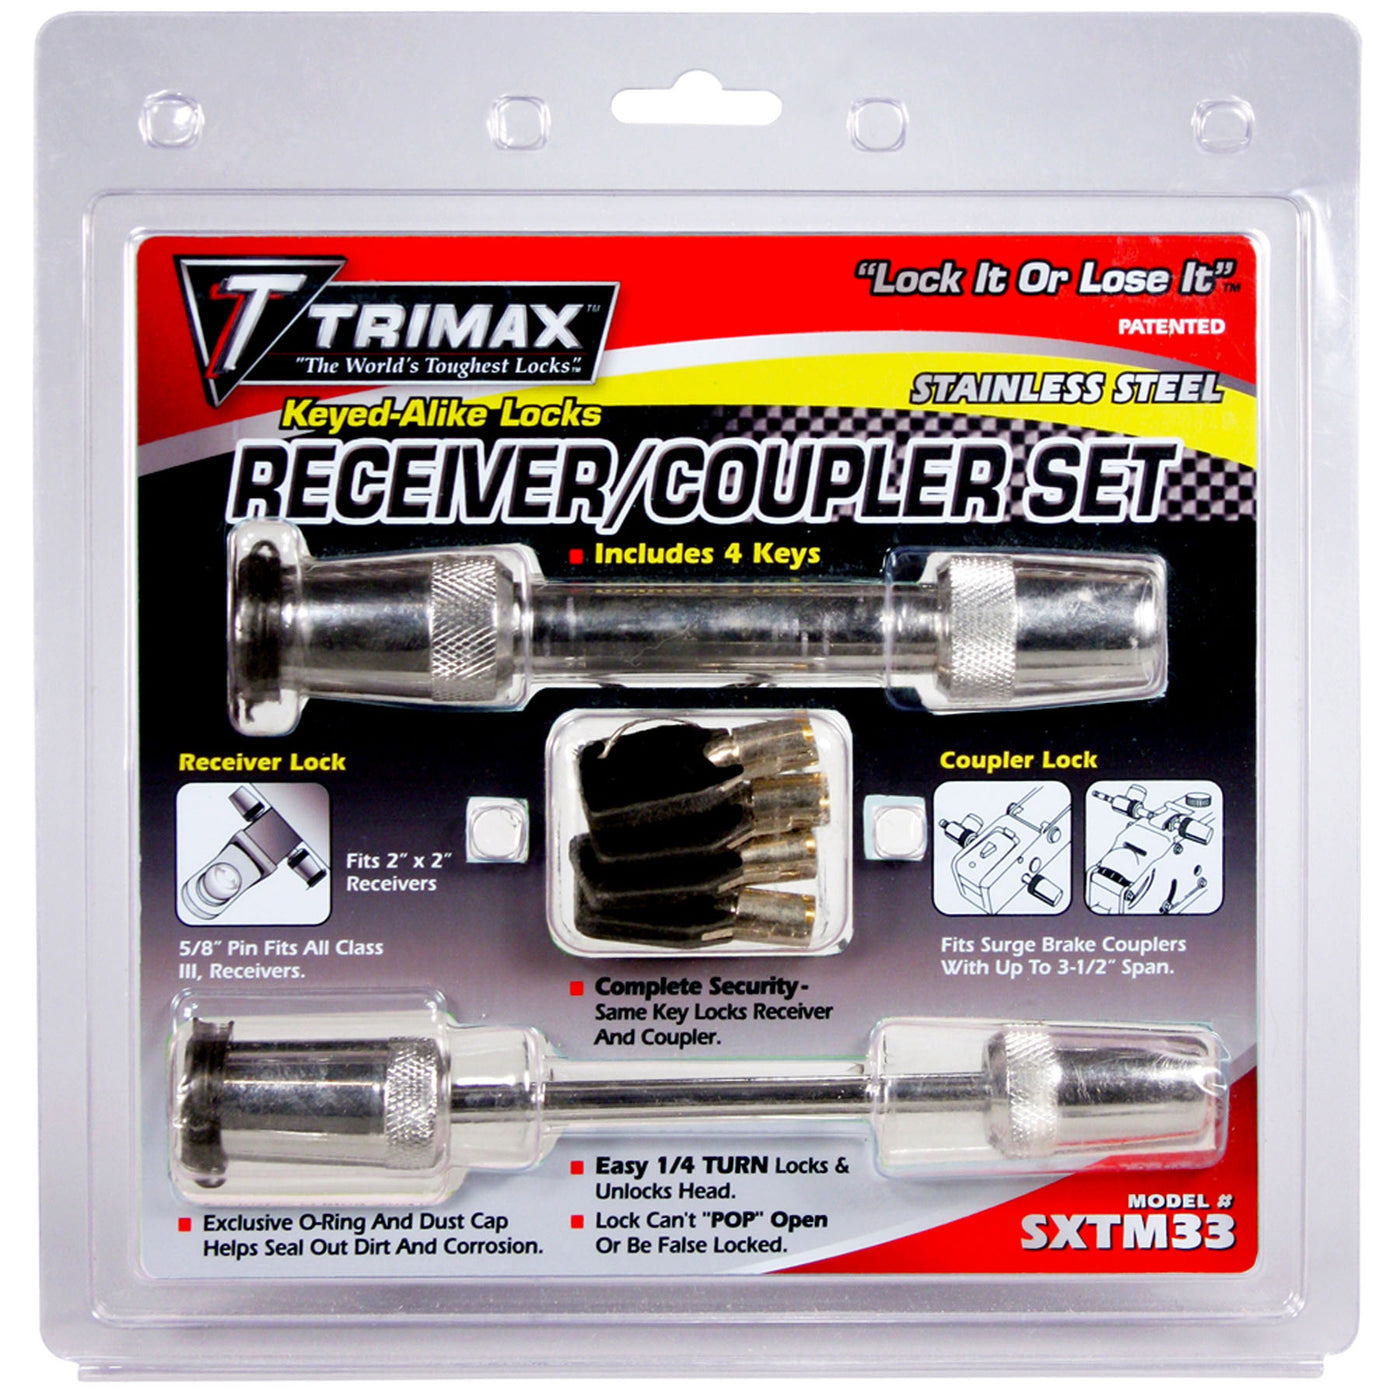 TRIMAX STAINLESS STEEL 5/8" RECIEVER LOCK, 3-1/2" SPAN COUPLER#mpn_SXTM33